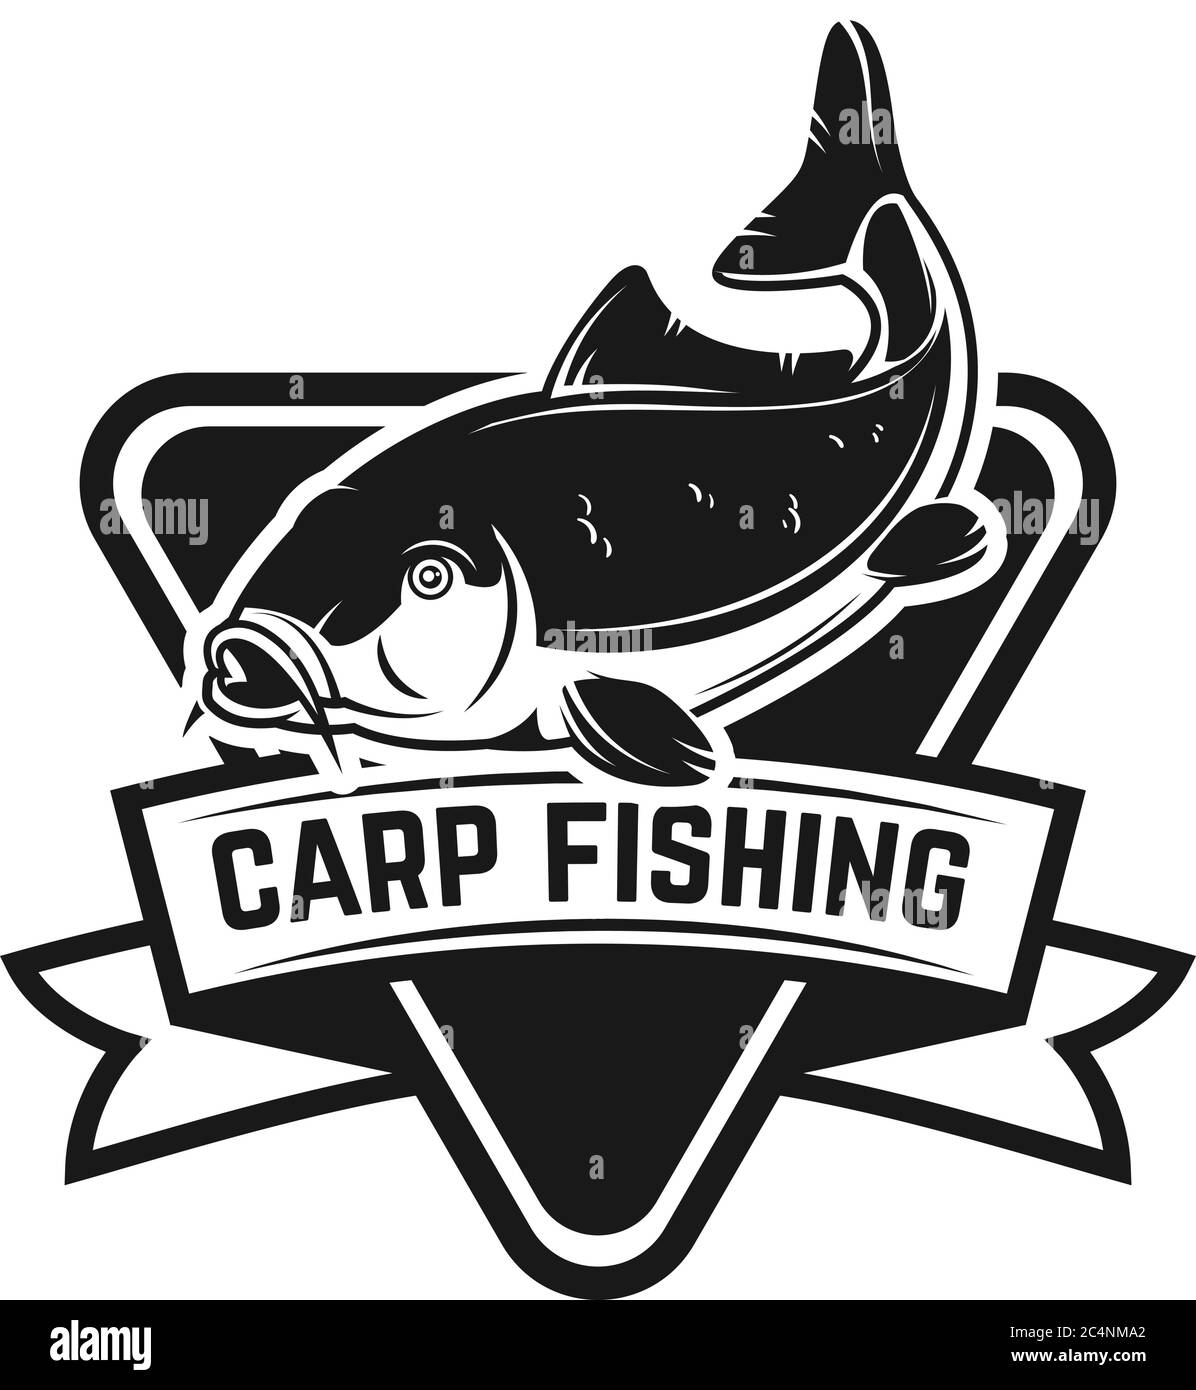 Carp fishing. Emblem template with carp fish. Design element for logo, label, sign, poster. Vector illustration Stock Vector